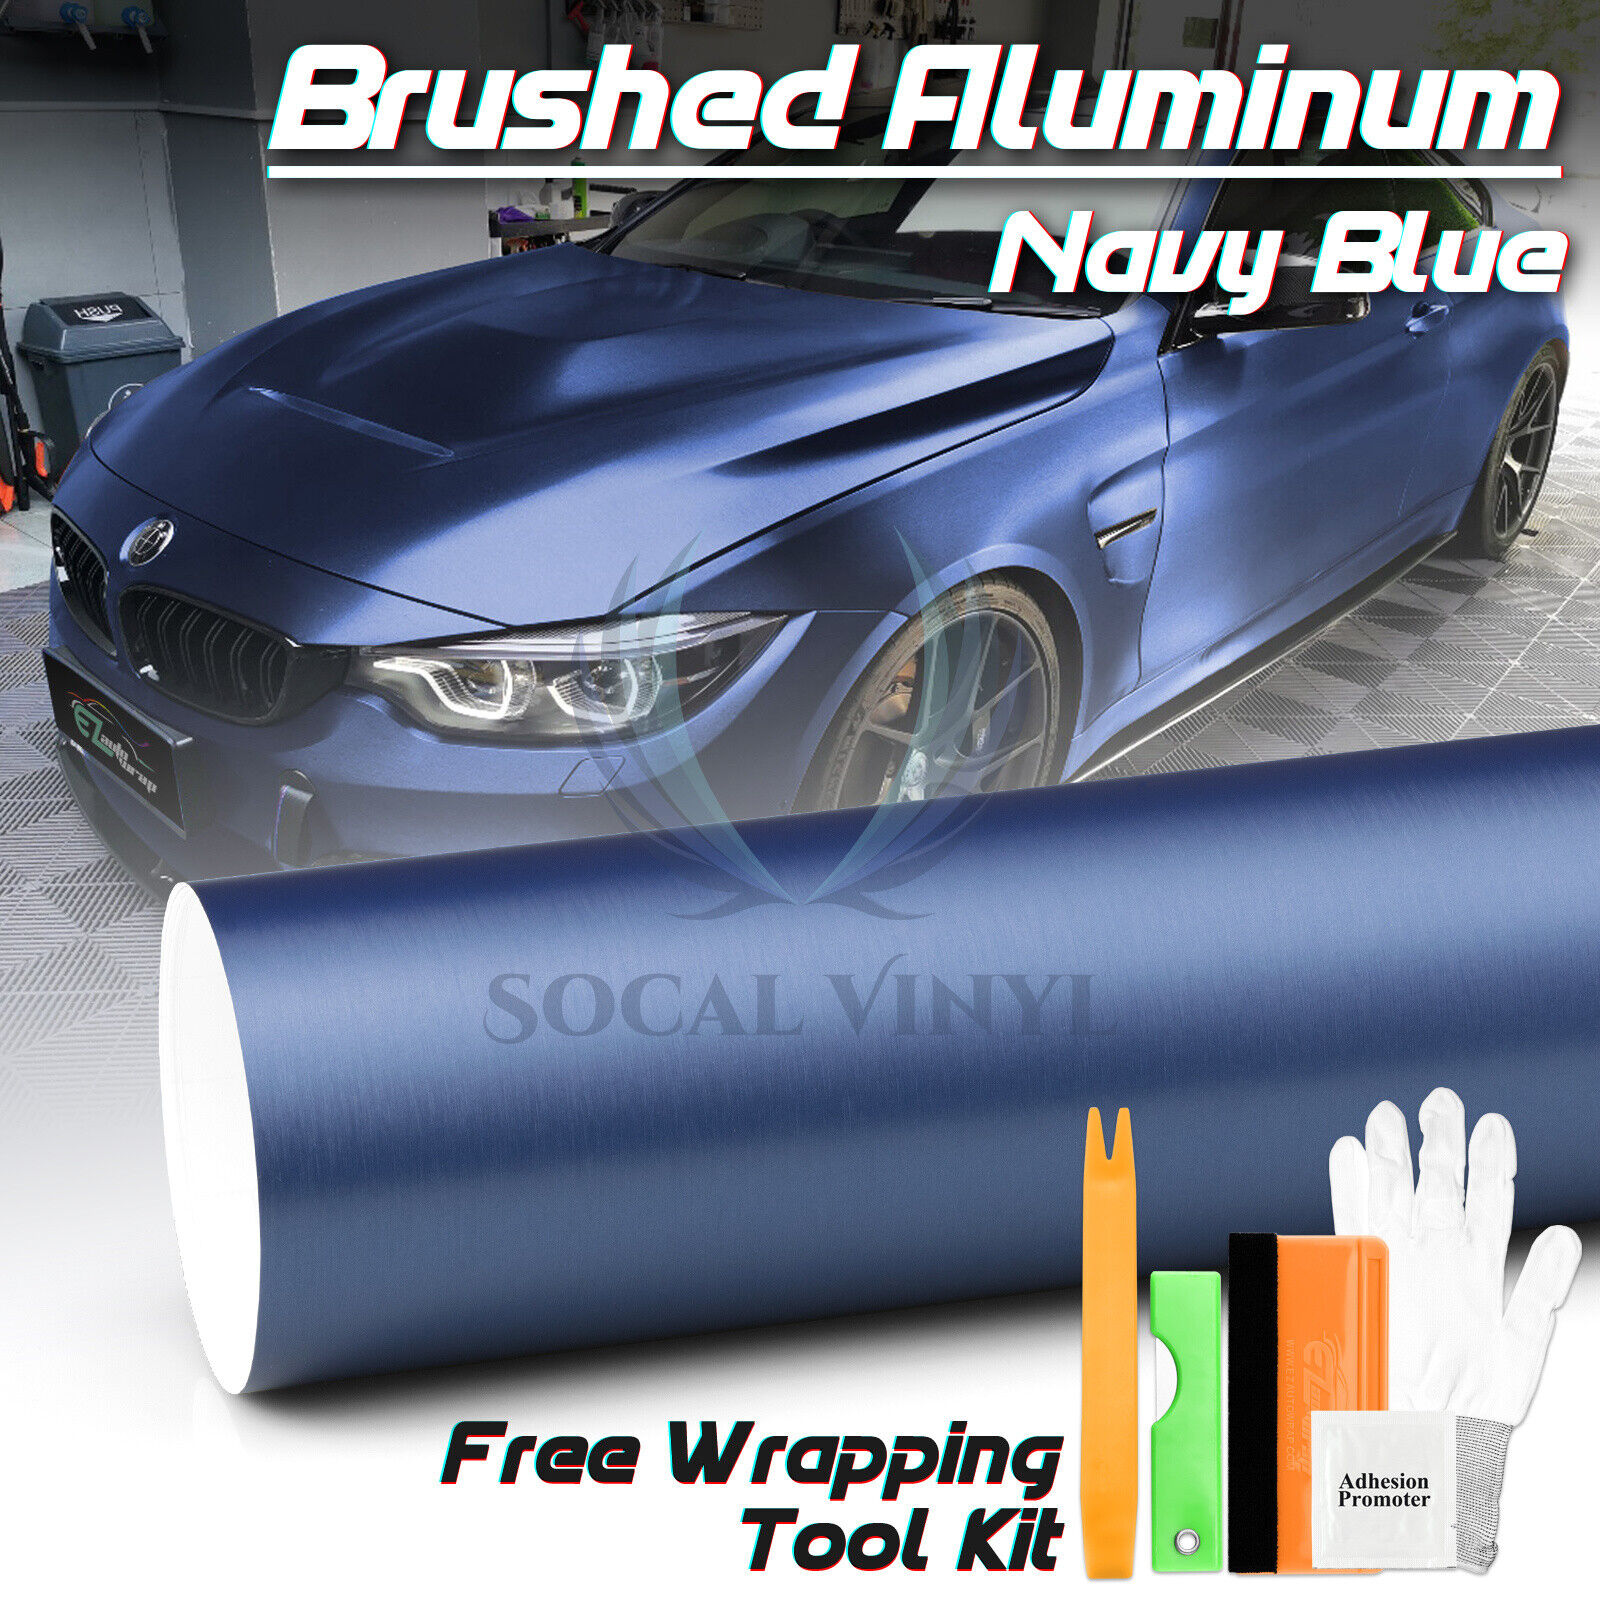 Premium Brushed Aluminum Navy Blue Steel Vinyl Wrap Sticker Decal Air Release